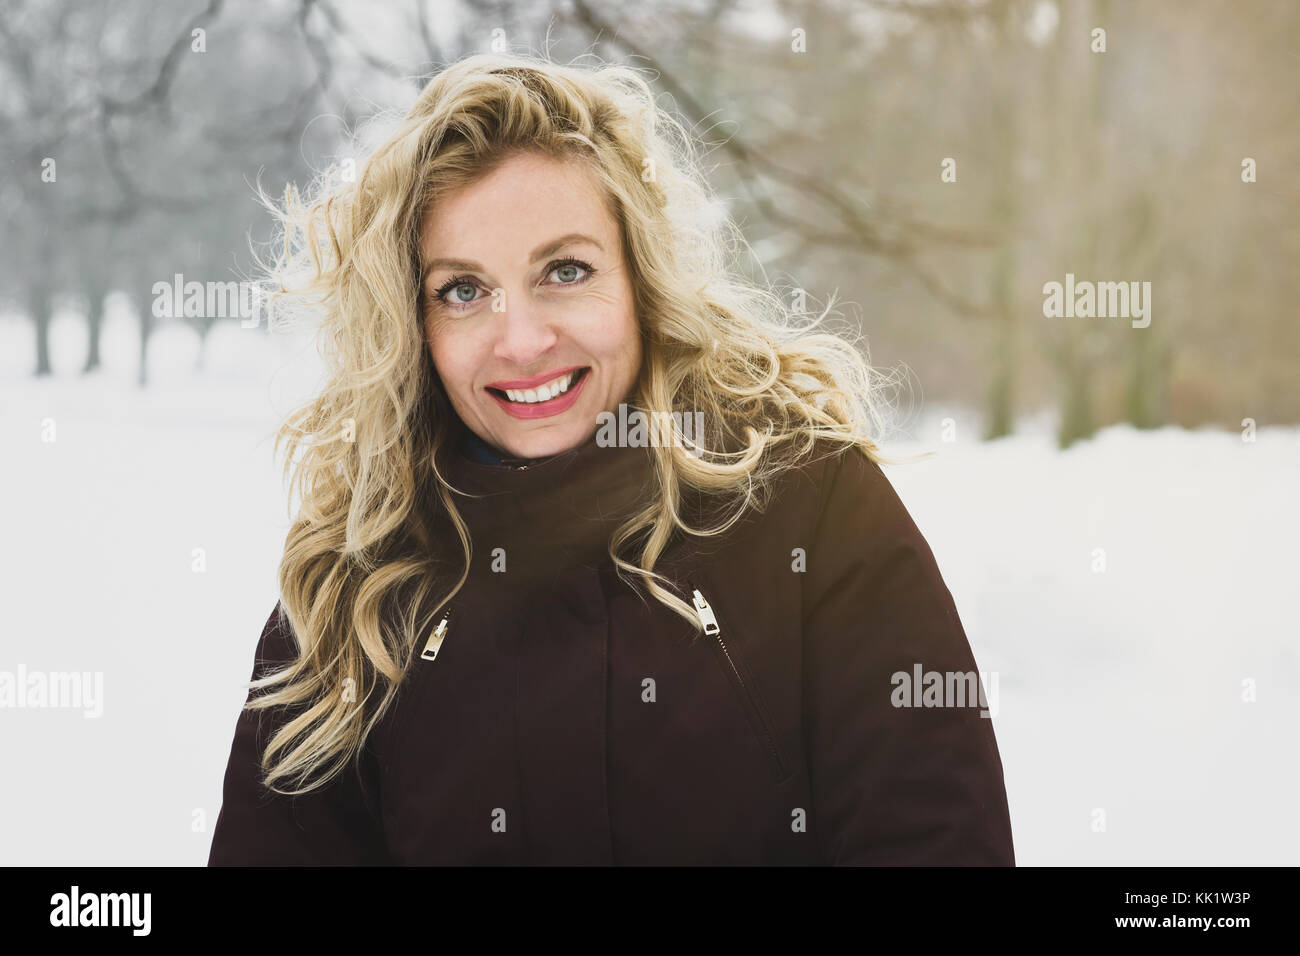 woman enjoying a winter walk through snow covered park Stock Photo